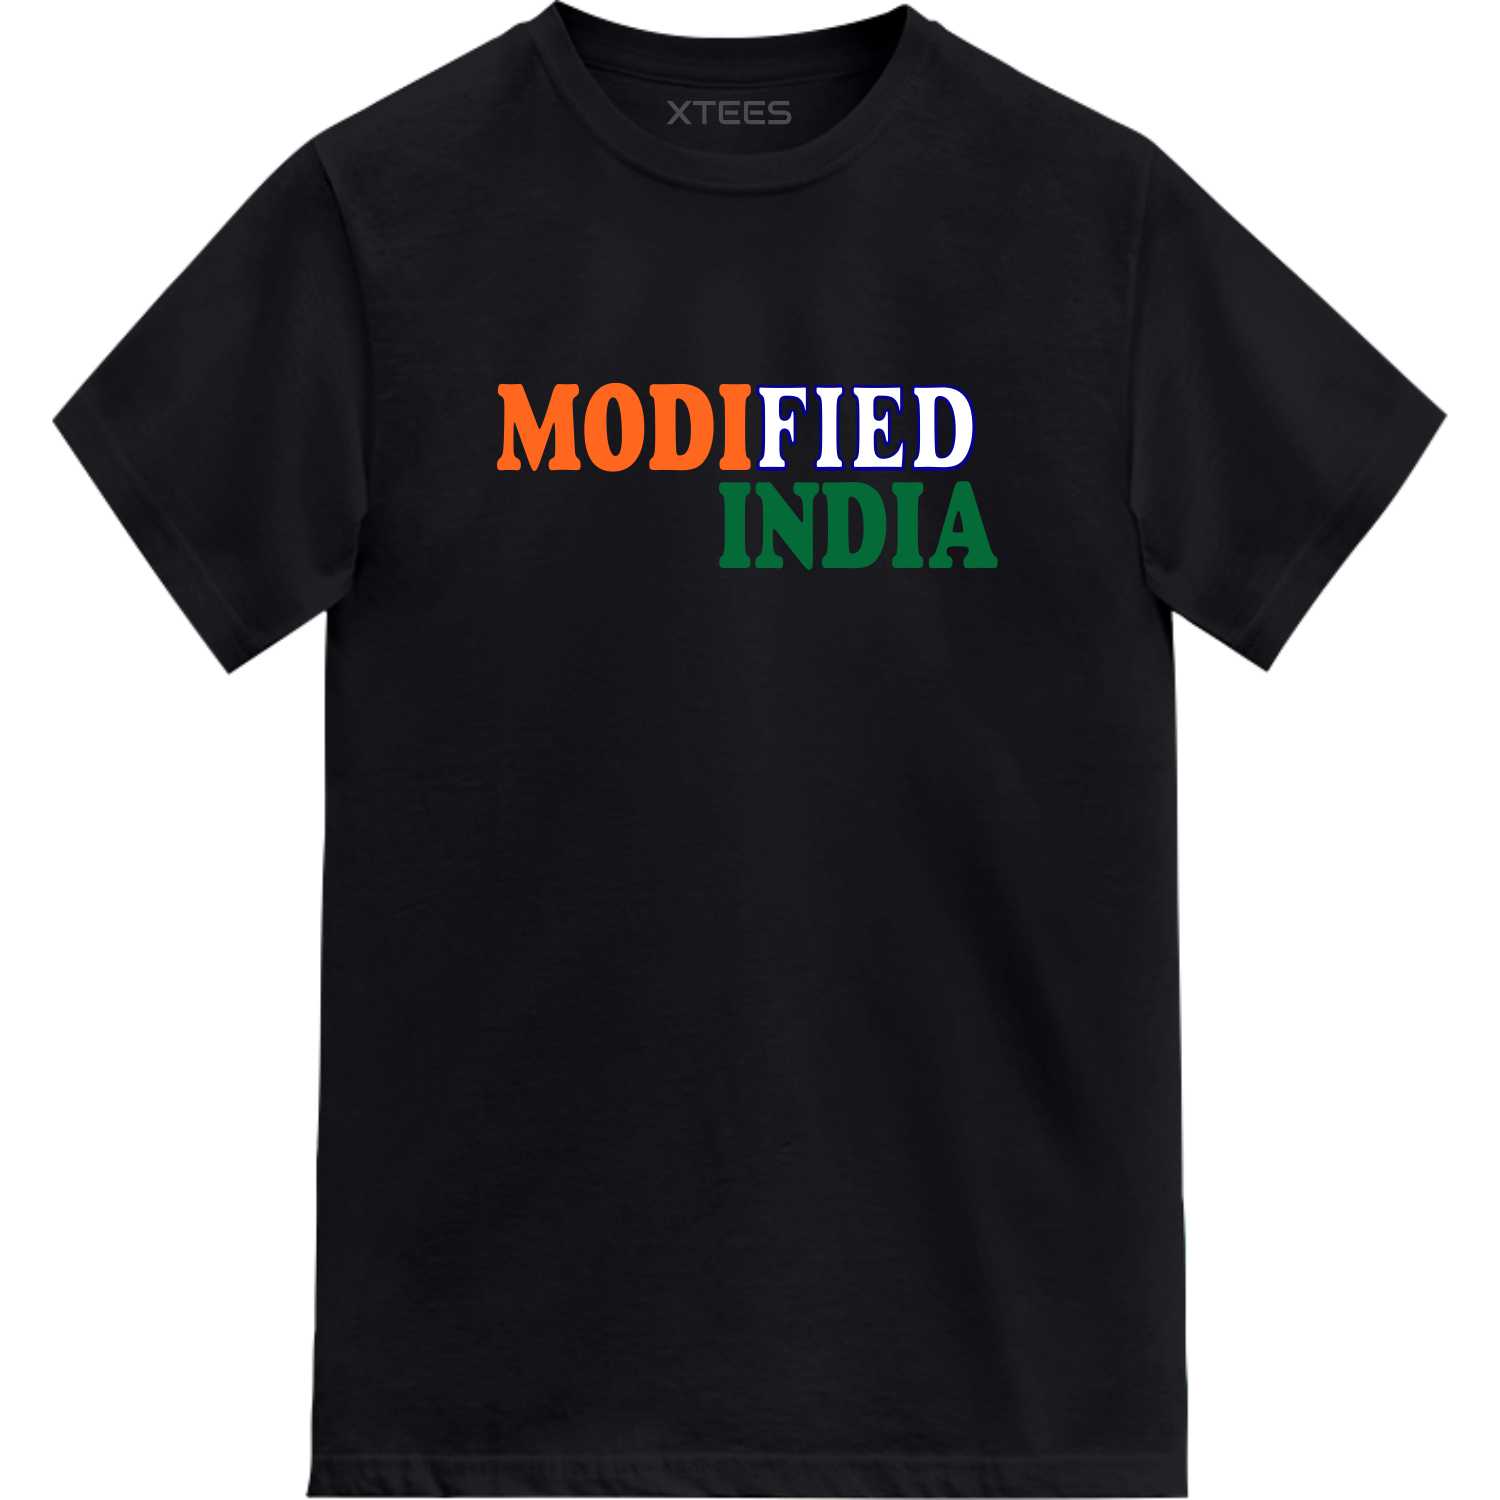 Modified India T-shirt image